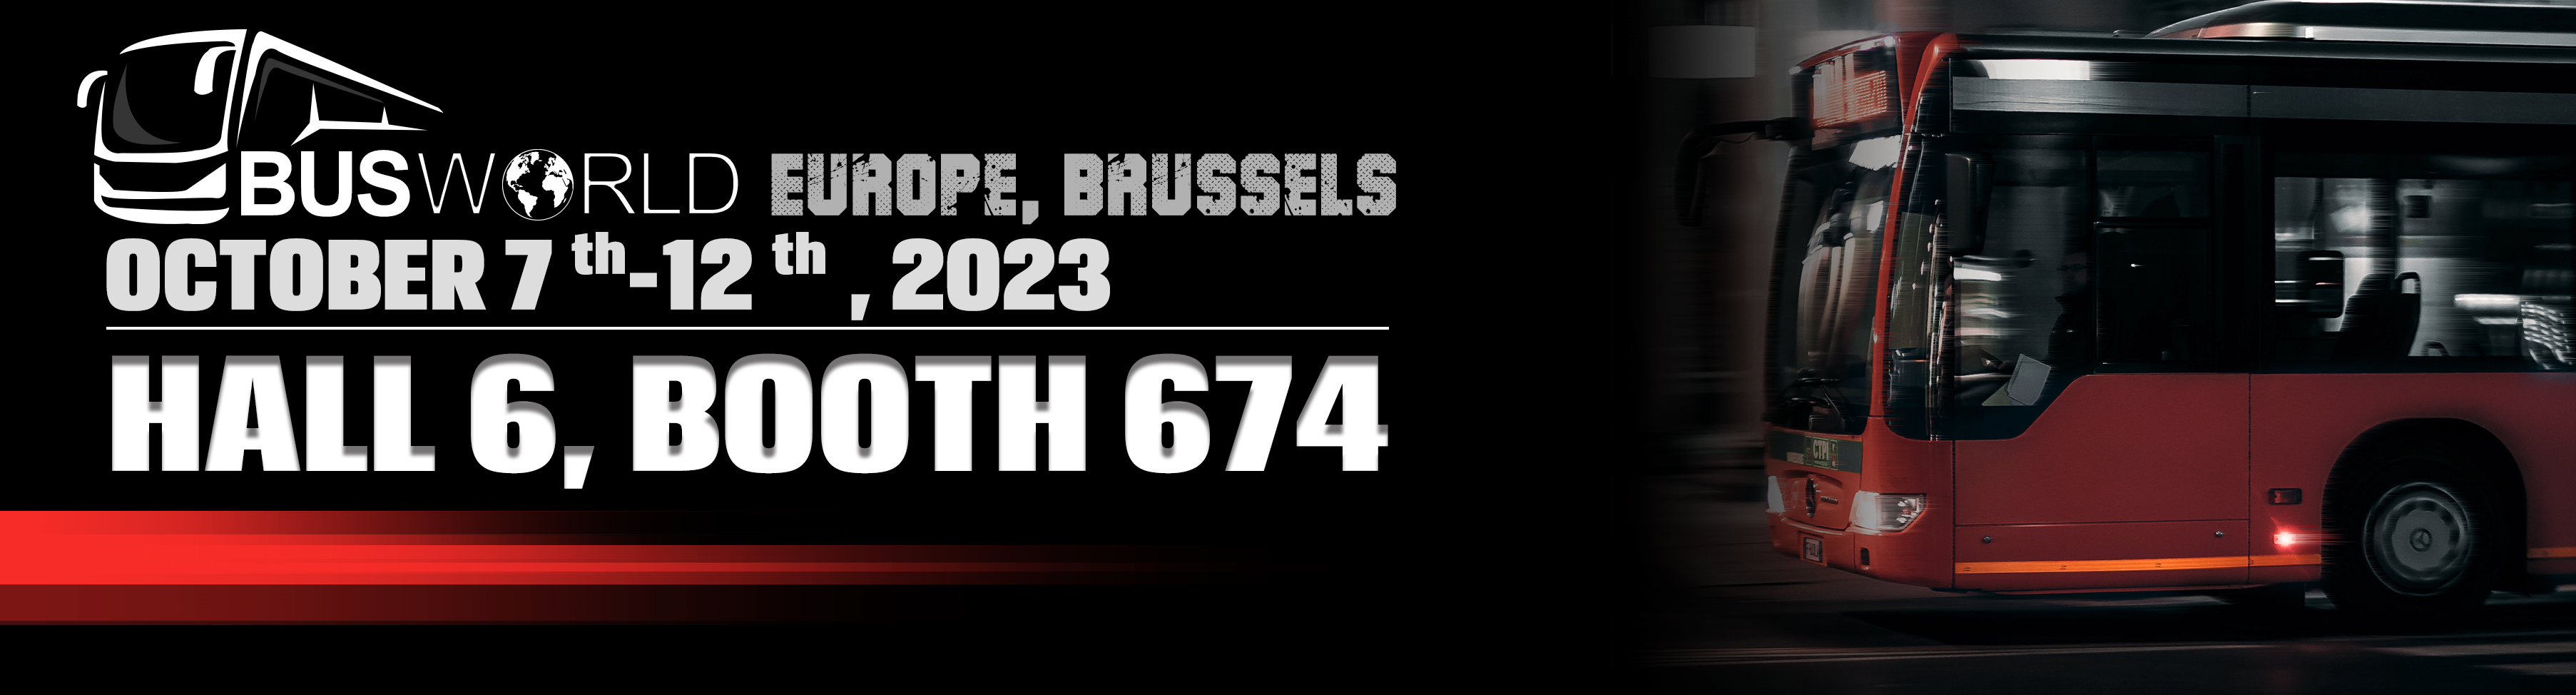 Busworld Europe, Brussels 2023